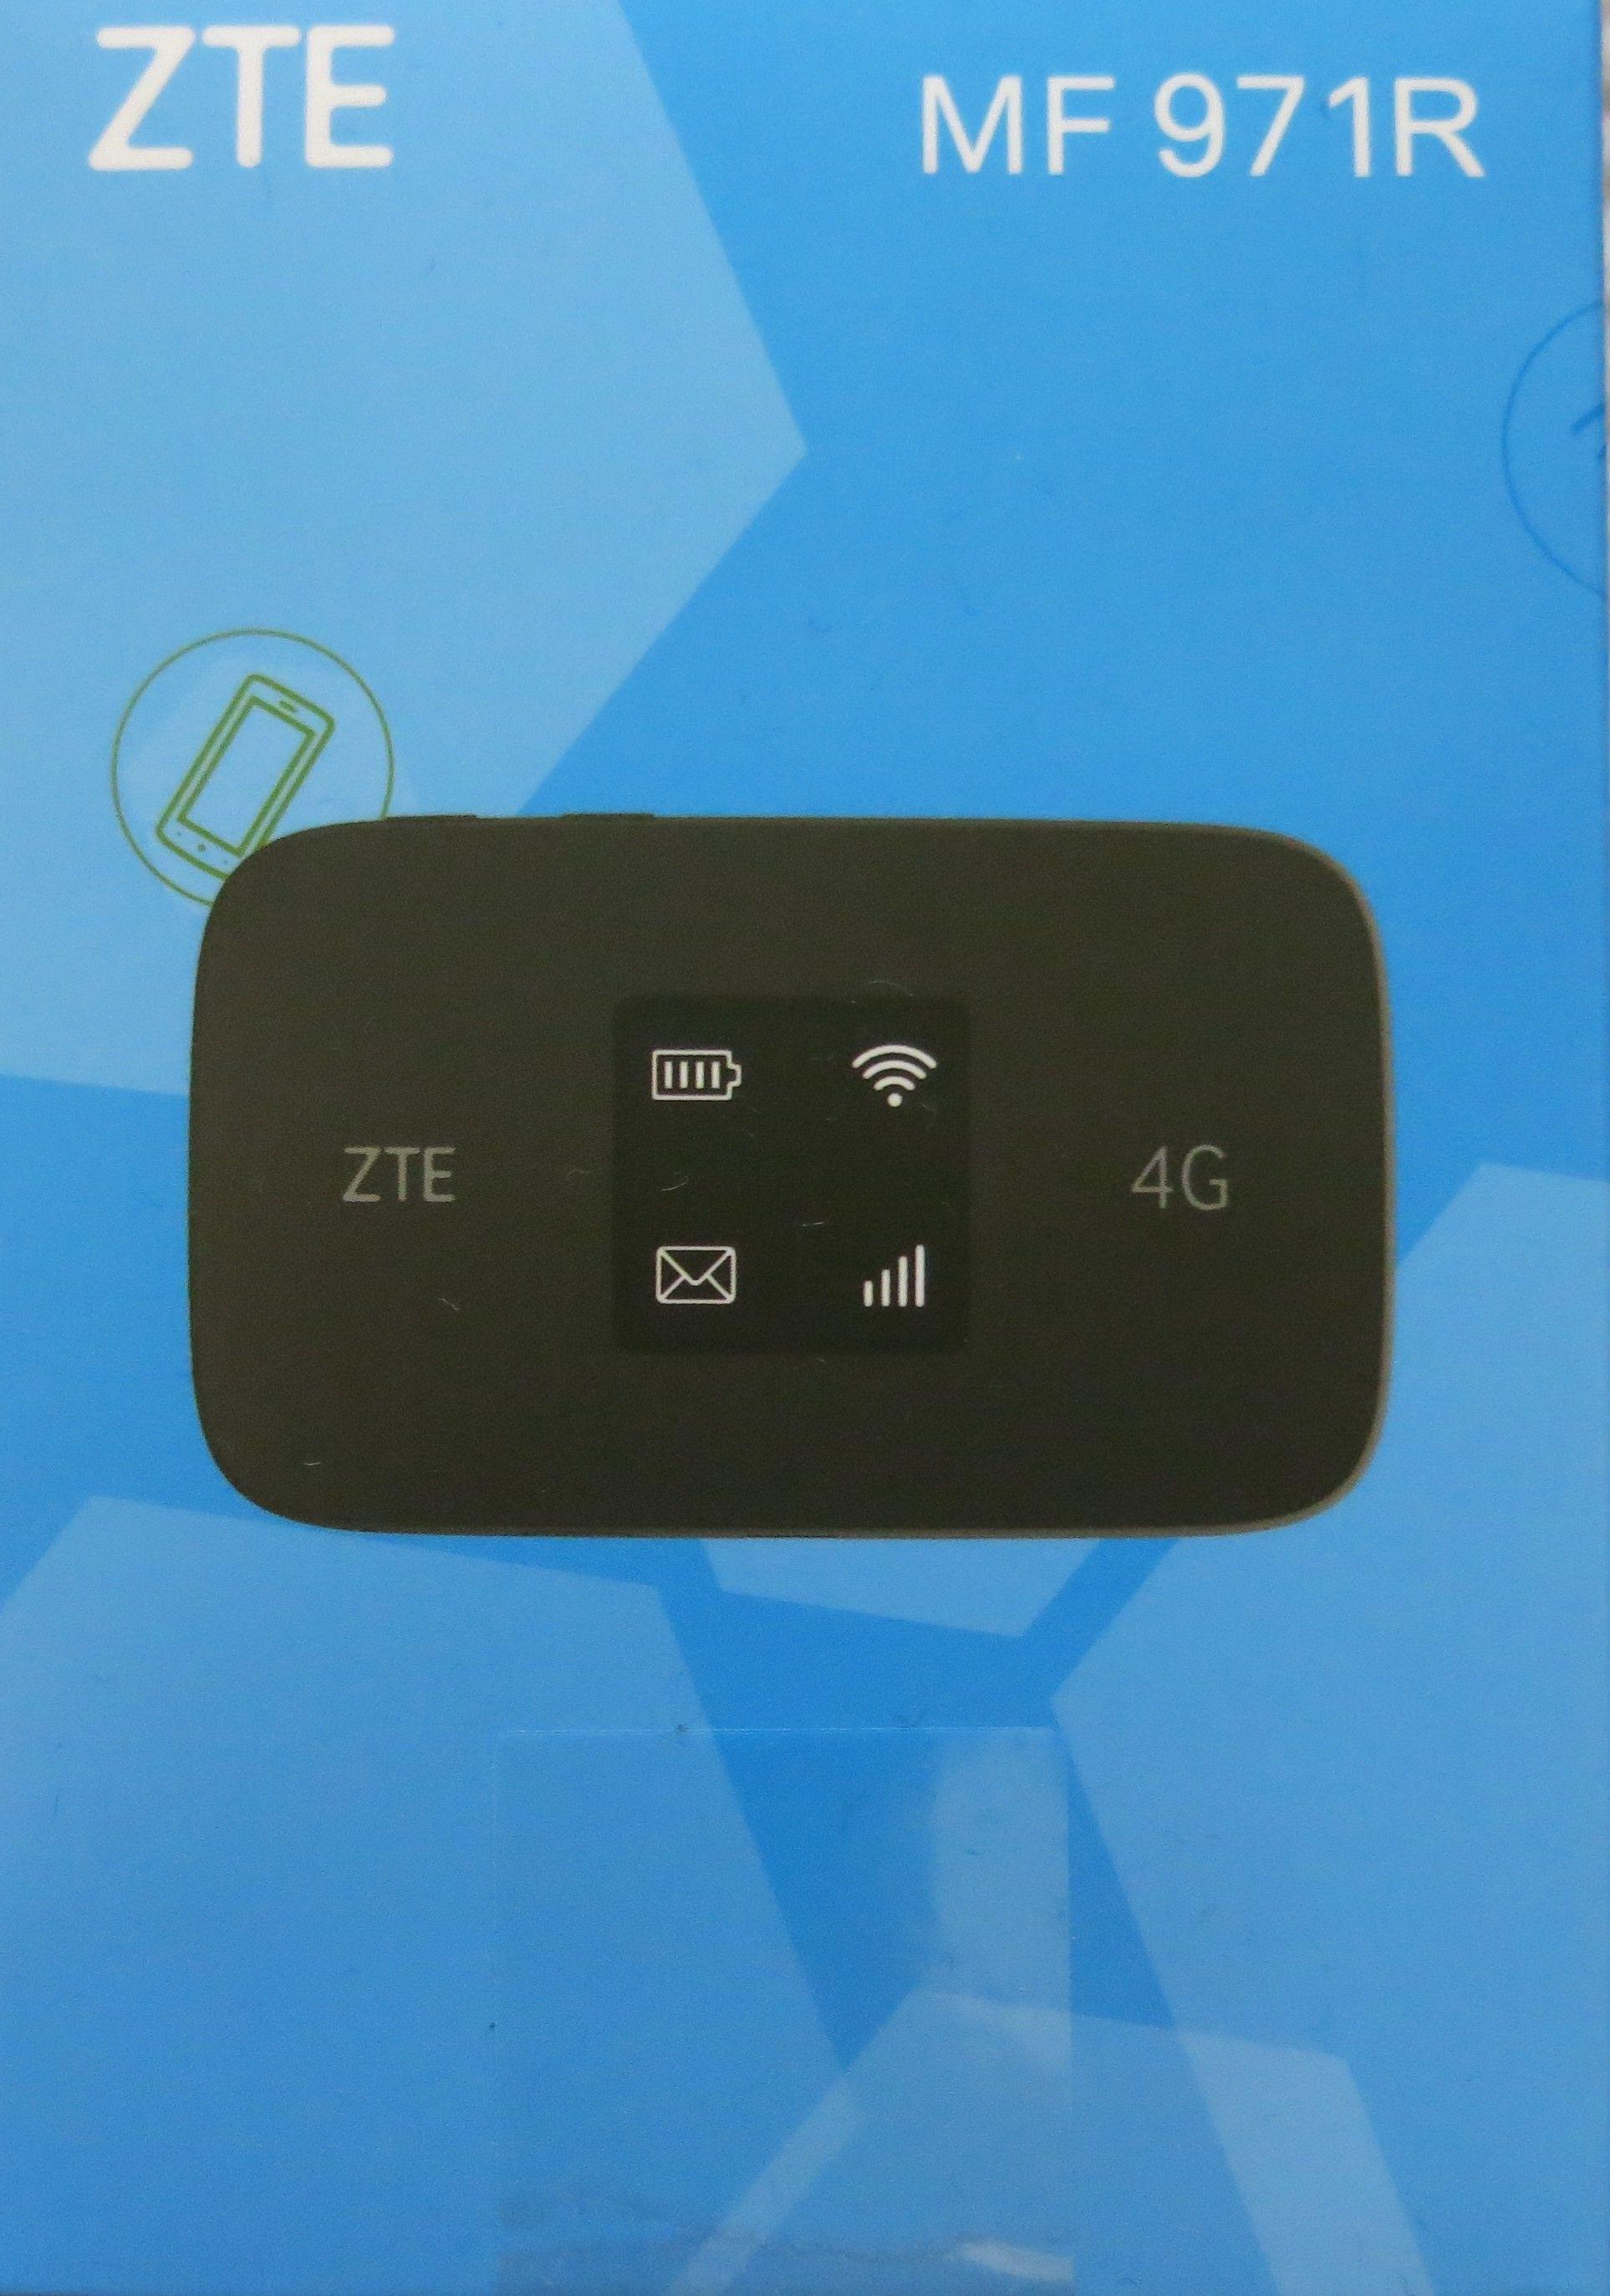 Router mobilny ZTE MF971R 4G LTE - czarny